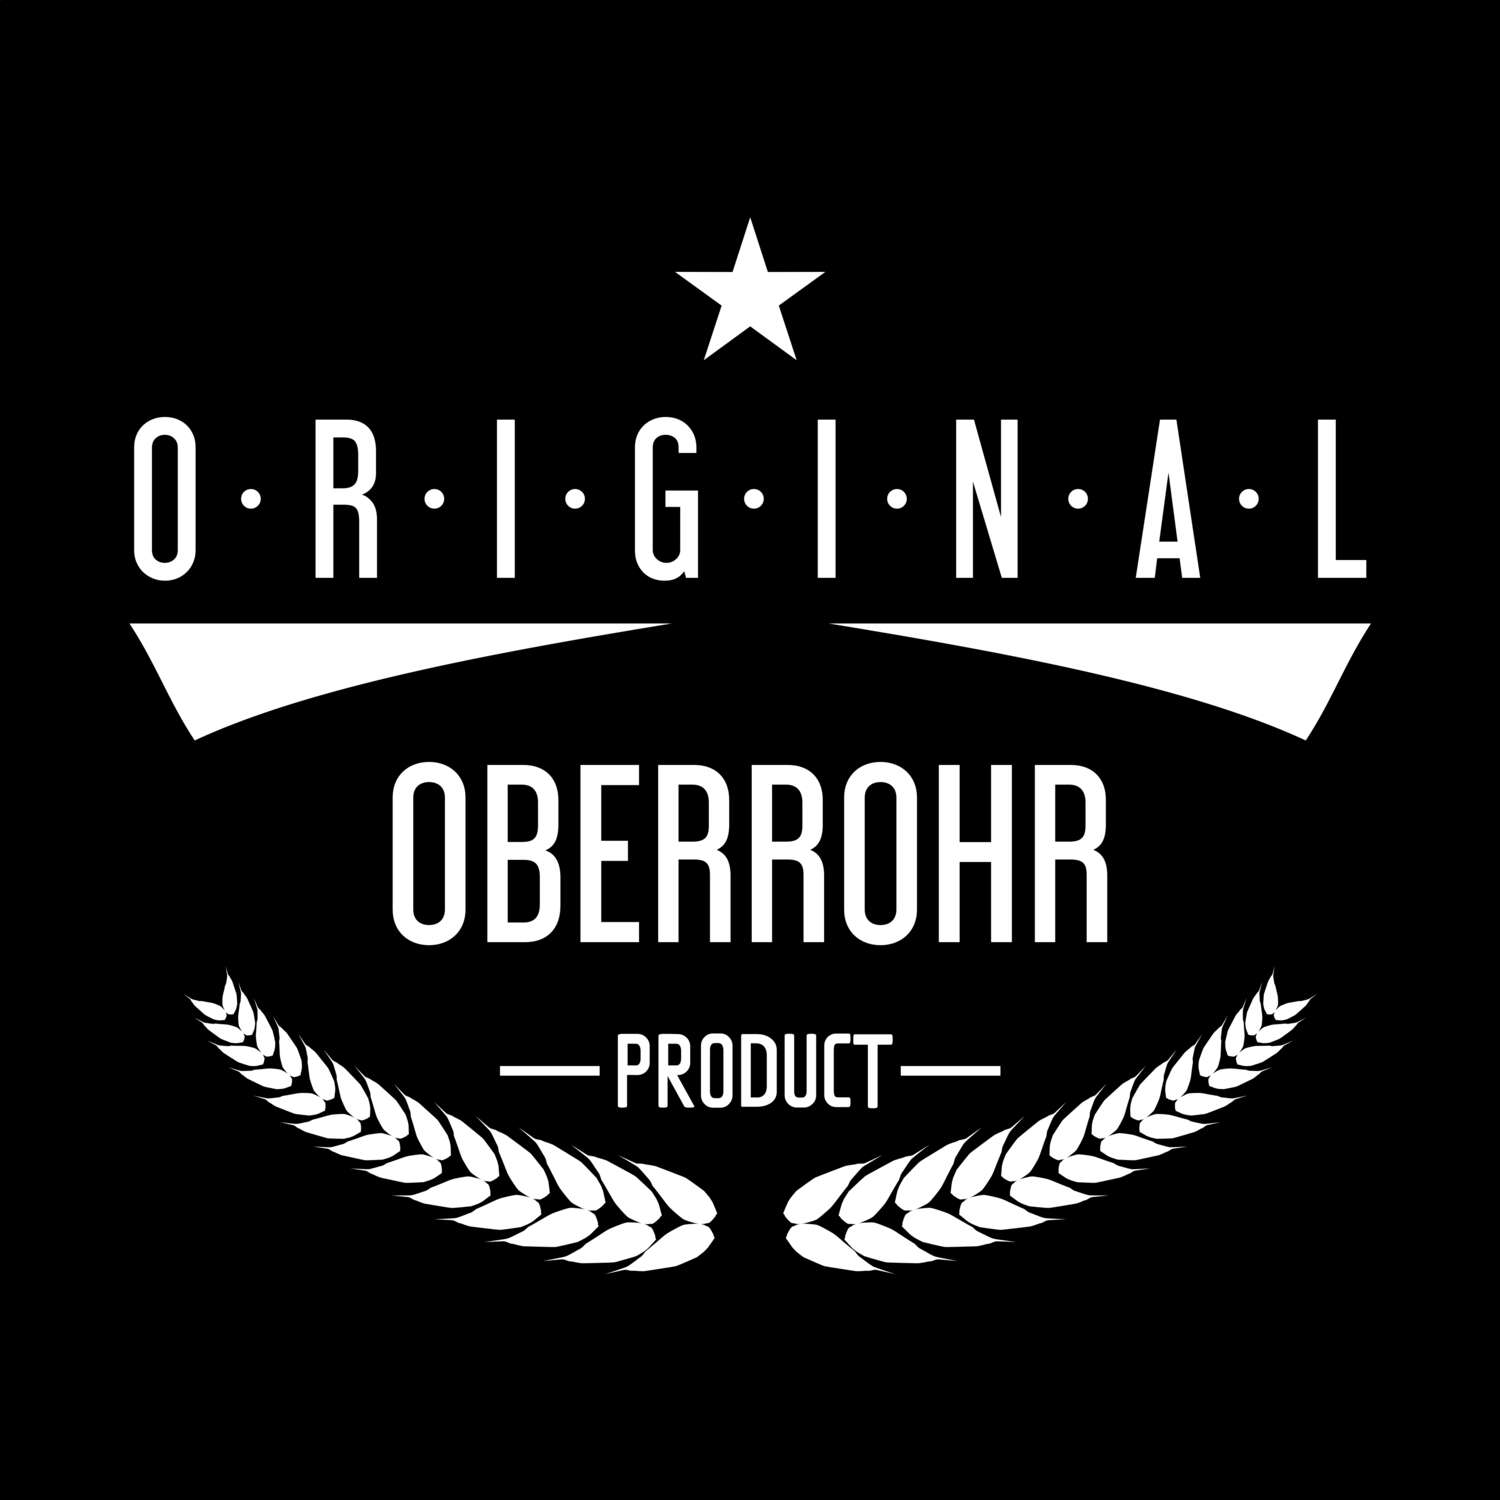 Oberrohr T-Shirt »Original Product«